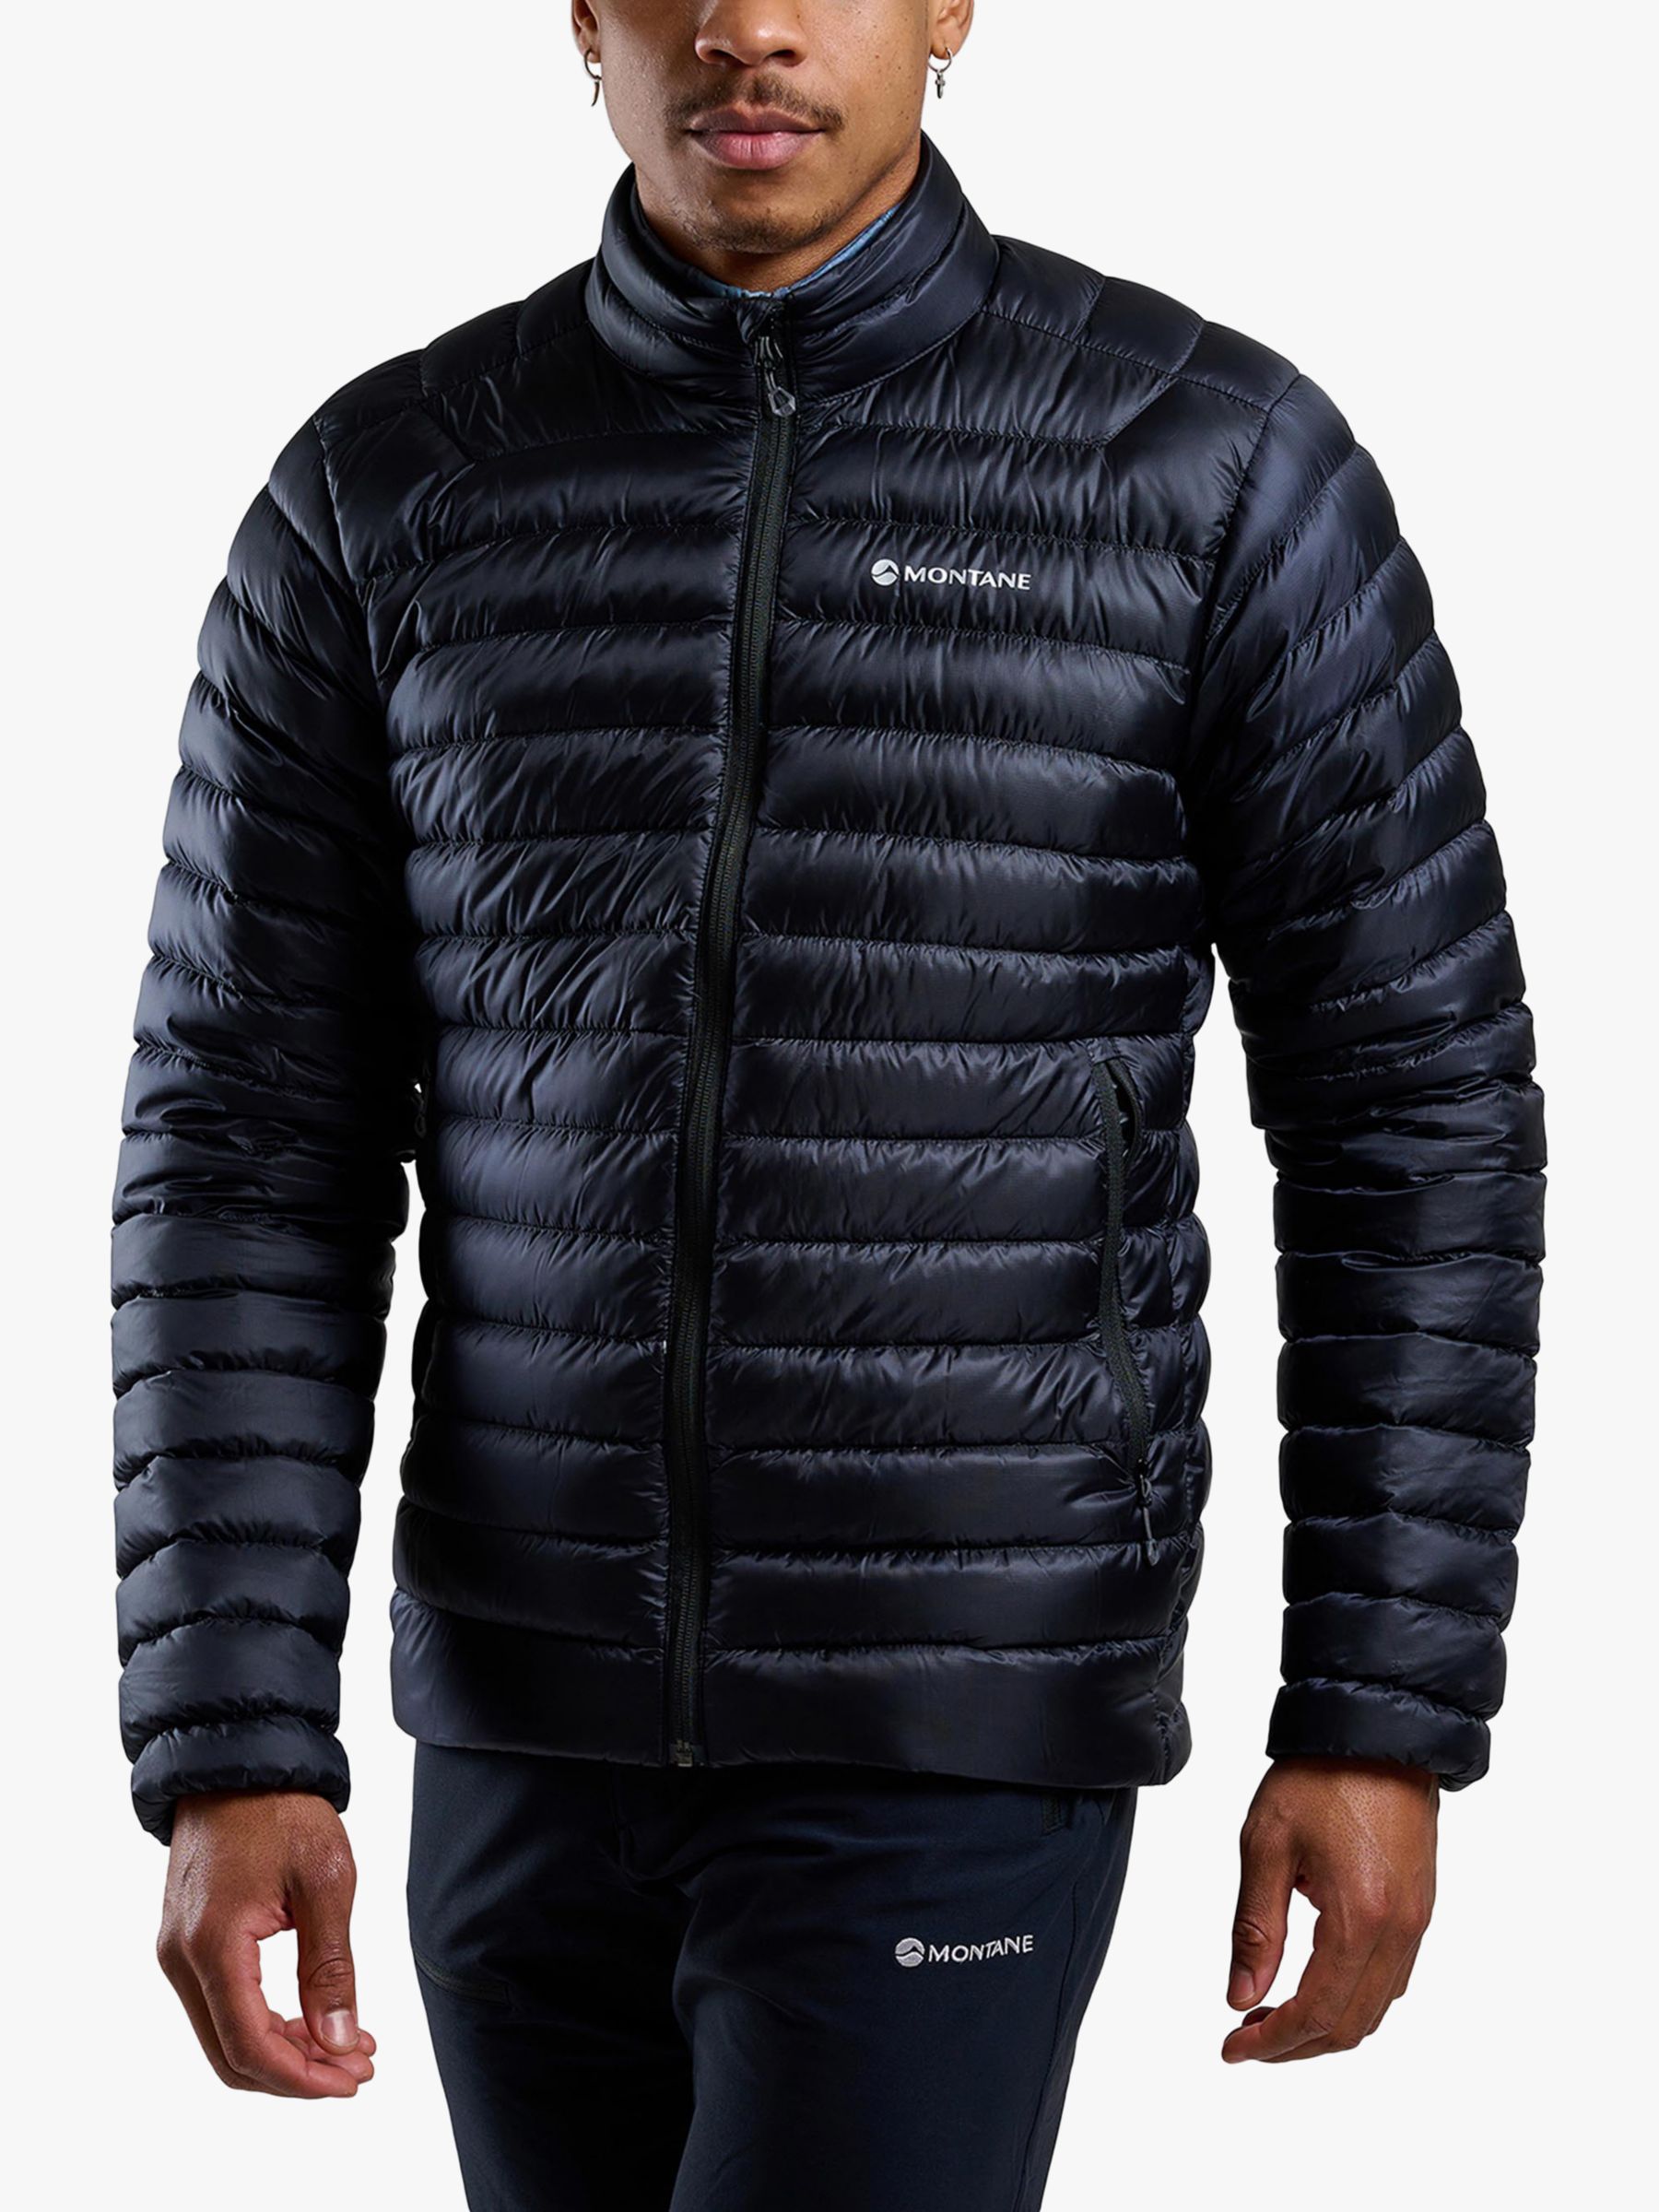 Montane Anti-Freeze Padded Jacket, Black, M